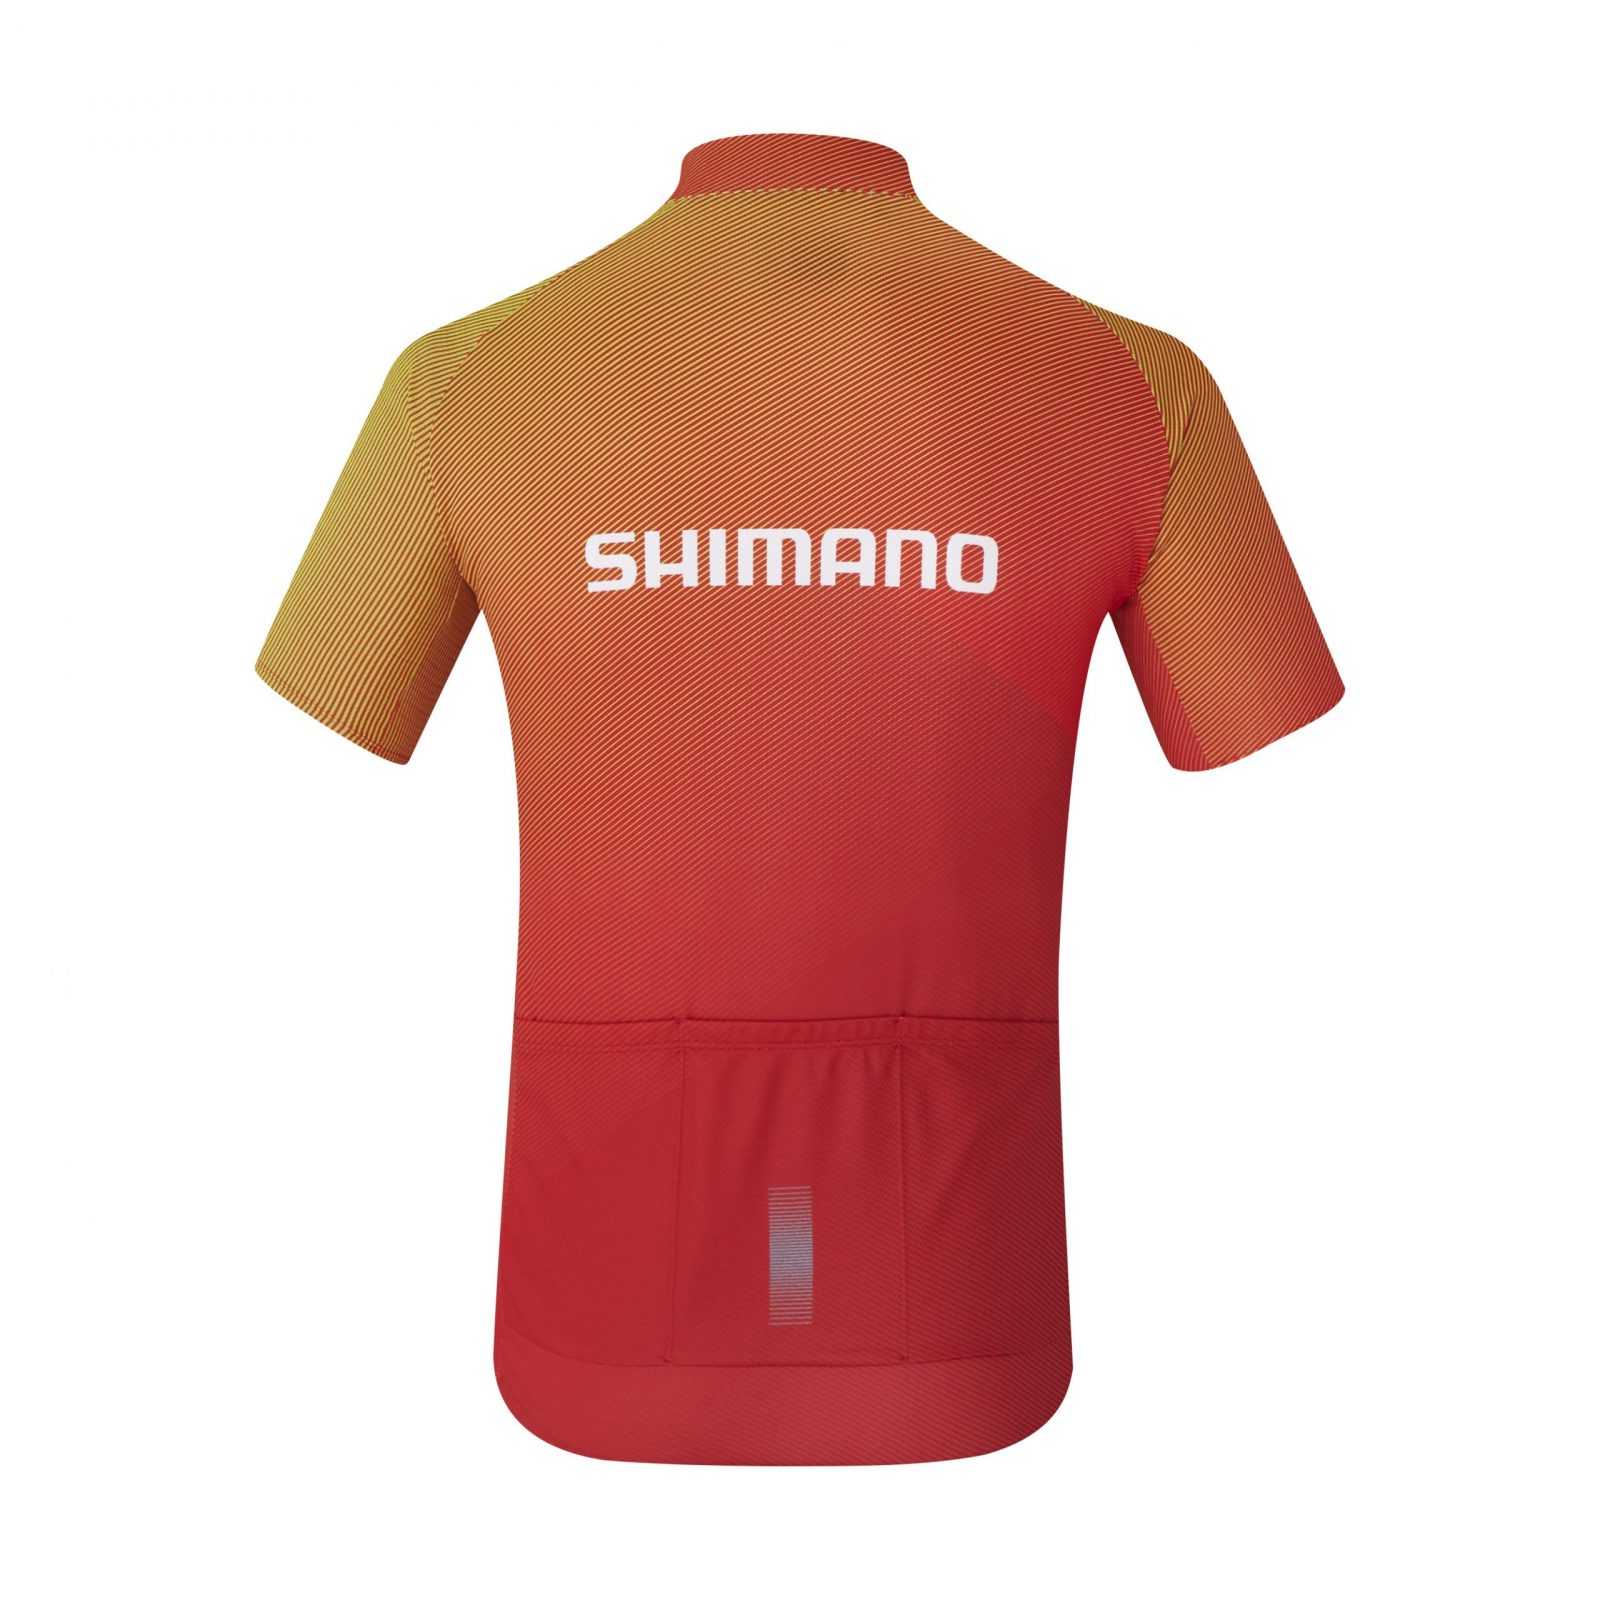 velodzhers-shimano-team2-chervone-rozm-xxl5caf3a1e1c8a0-original.jpg